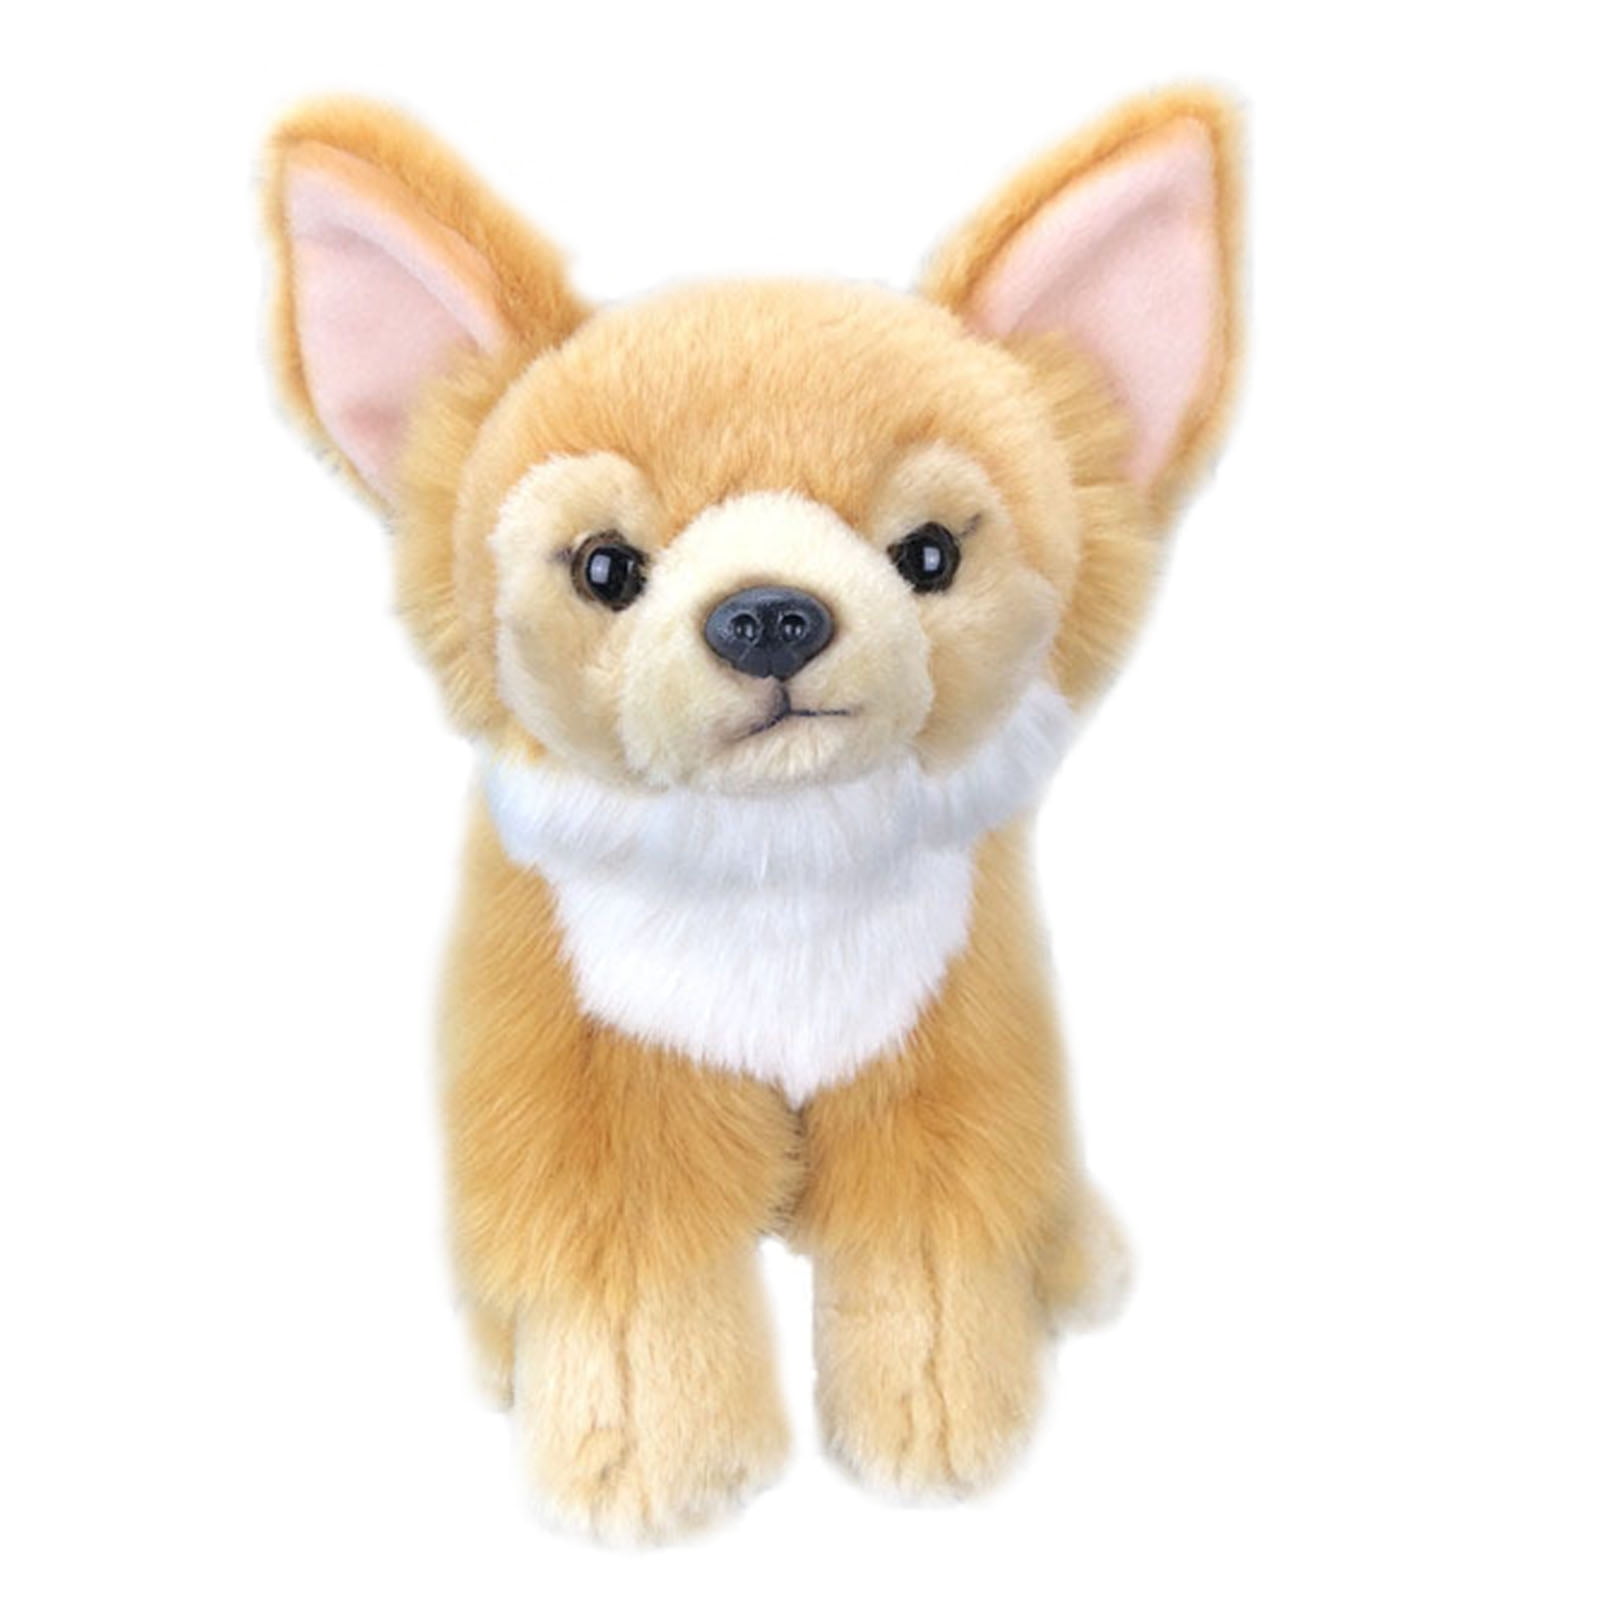 ZHONGXIN Made Simulation Chihuahua Dog Stuffed Animal - 10 inch Cute Chihuahua Dog Plush Toy, Lovely Dog Plush Toy Model As Gift Toy Gift C